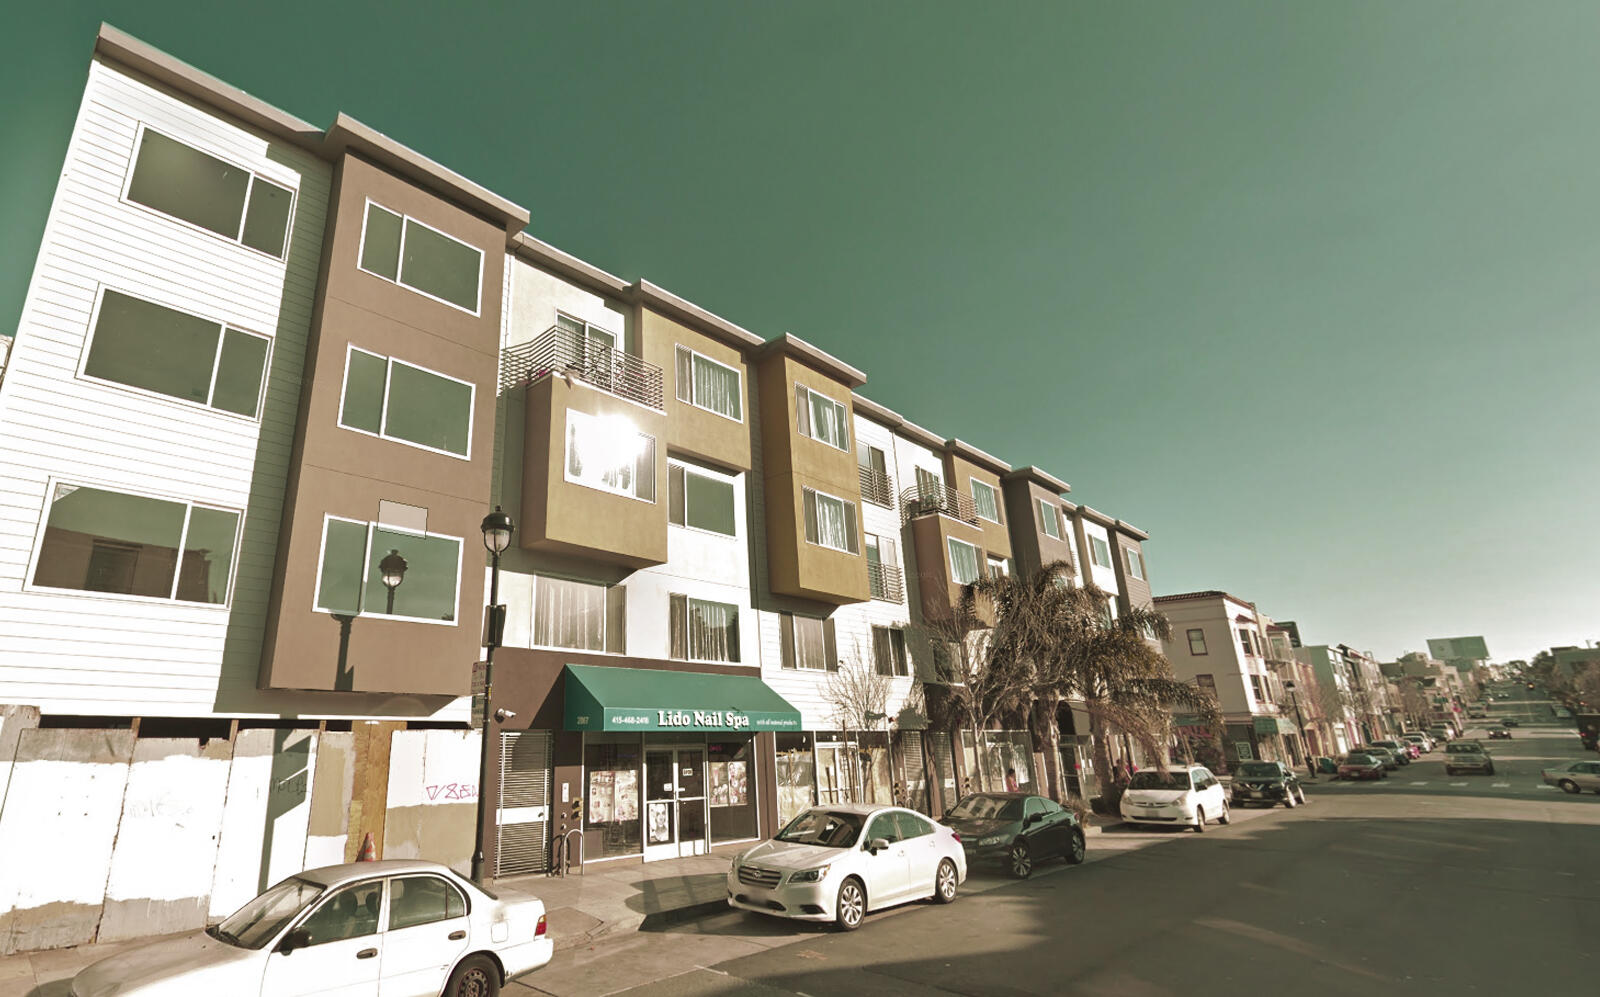 2861-2899 San Bruno Avenue (Google Maps)